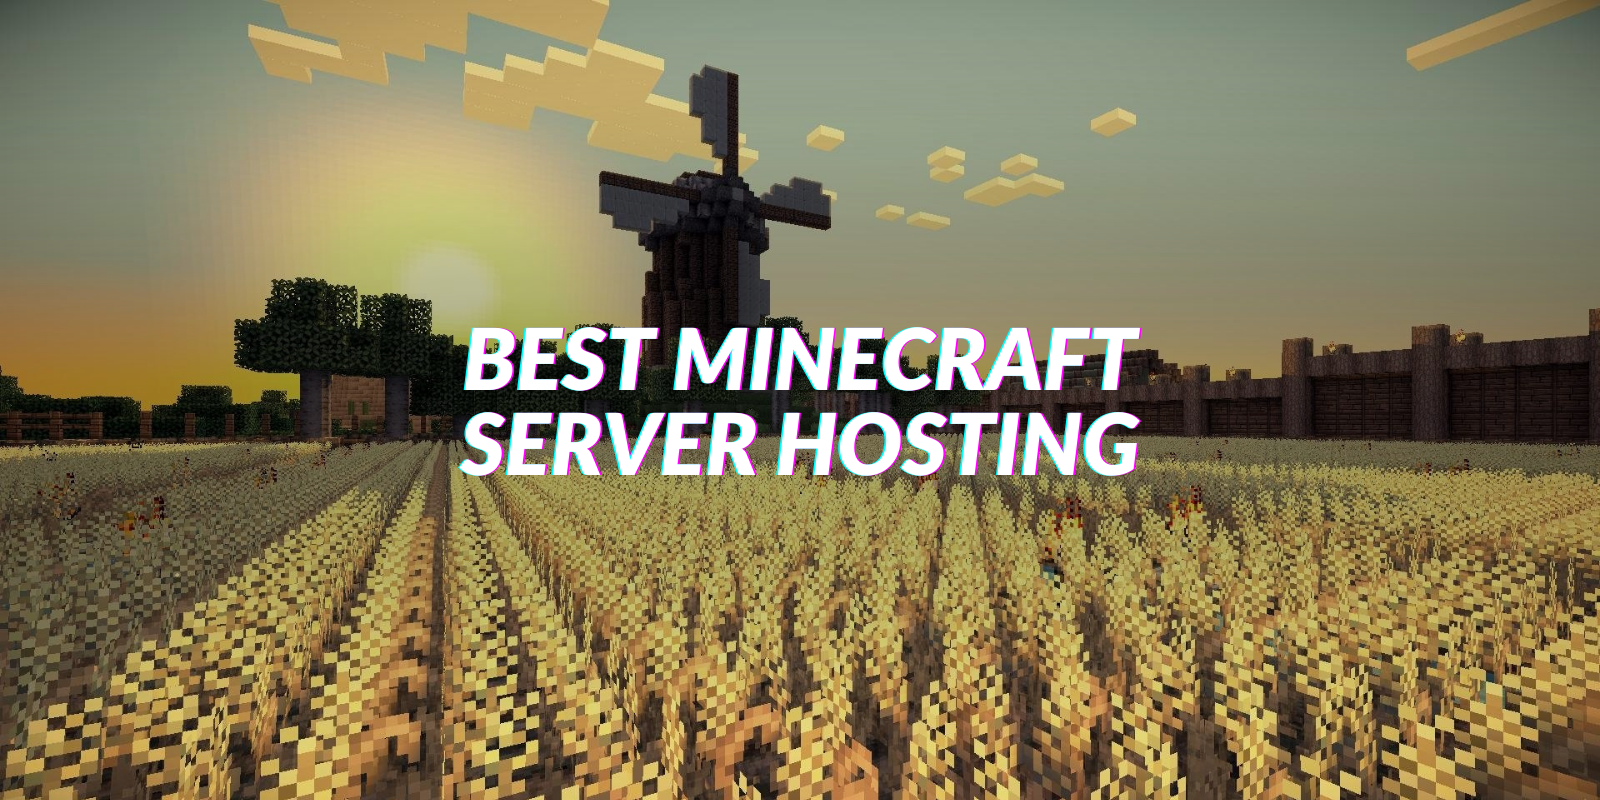 best server hosting minecraft reddit